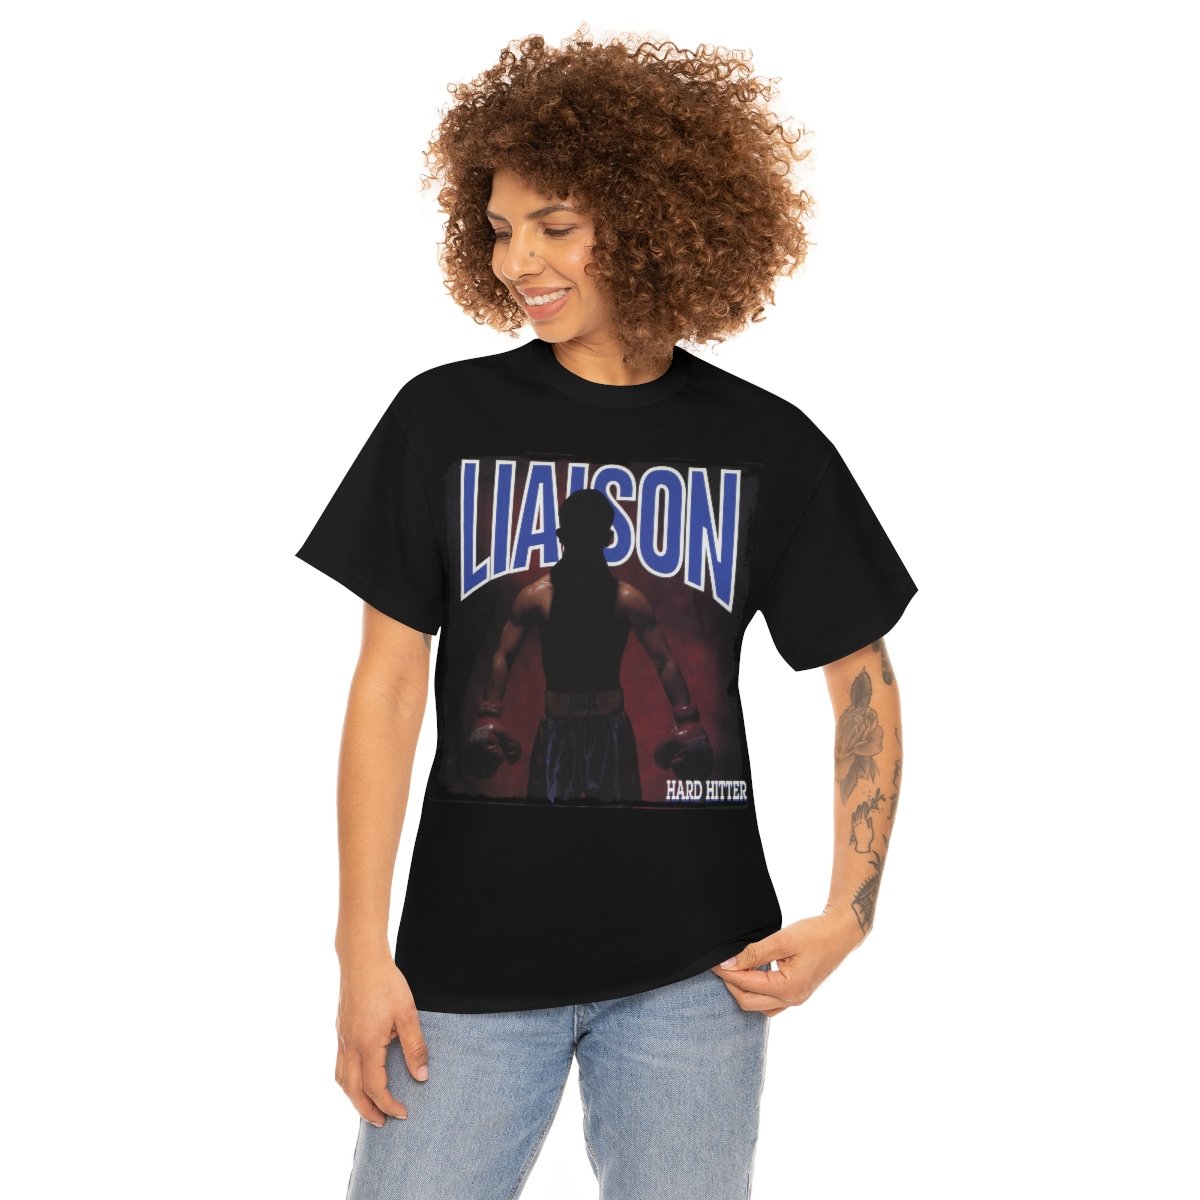 Liaison – Hard Hitter Short Sleeve Tshirt (5000)